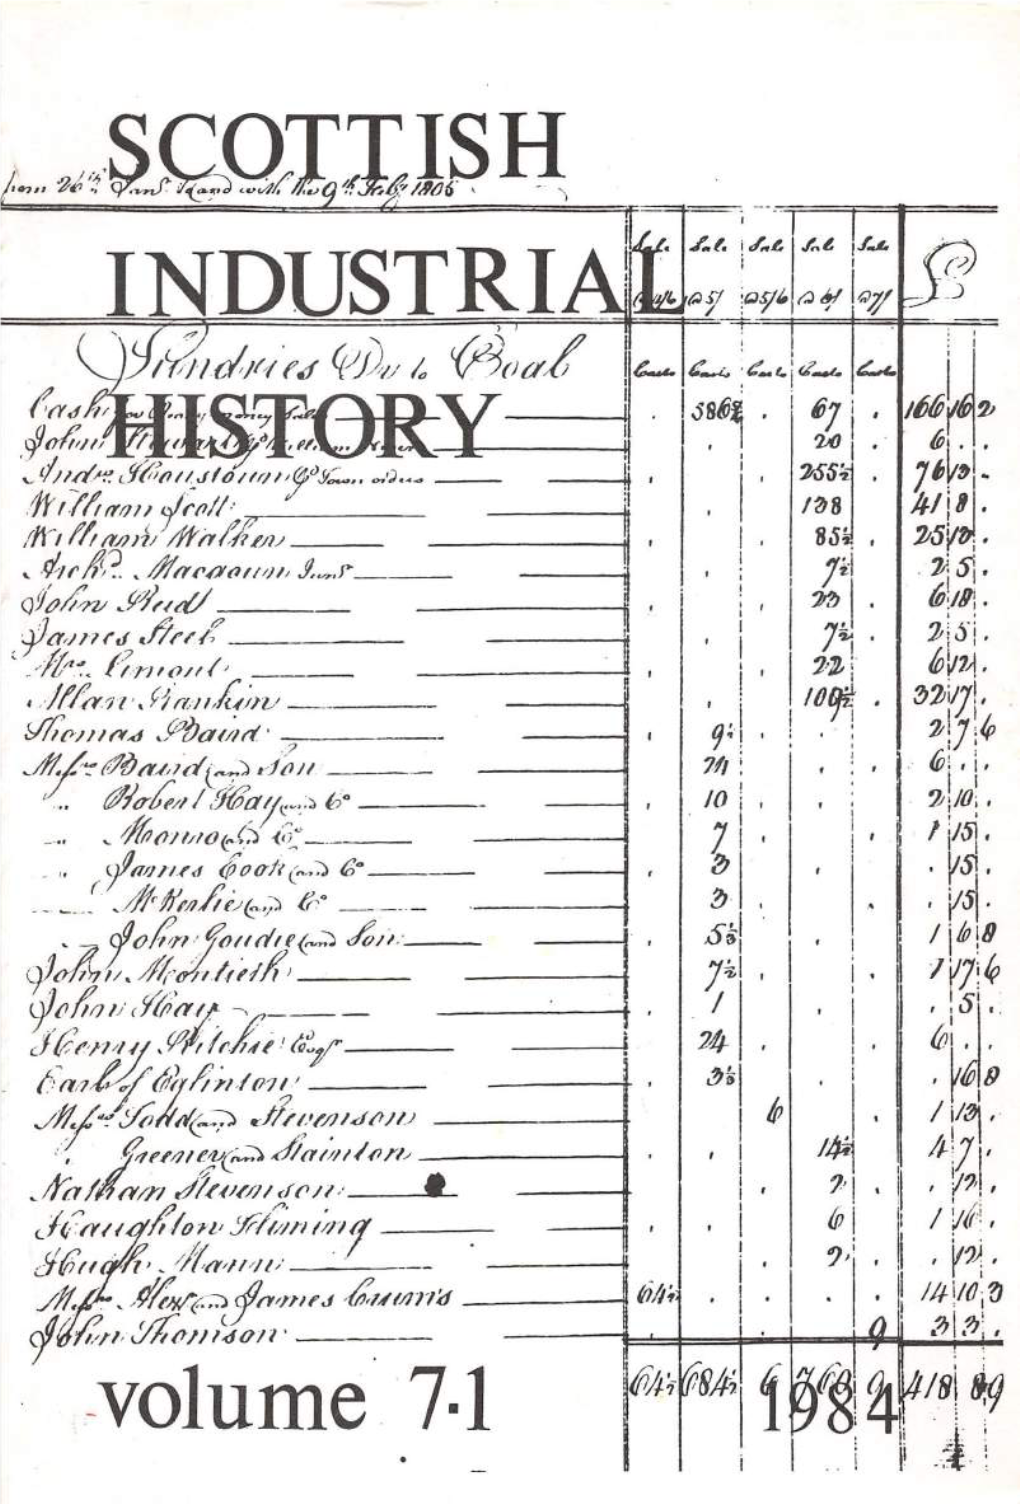 Scottish Industrial History Vol 7.1 1984